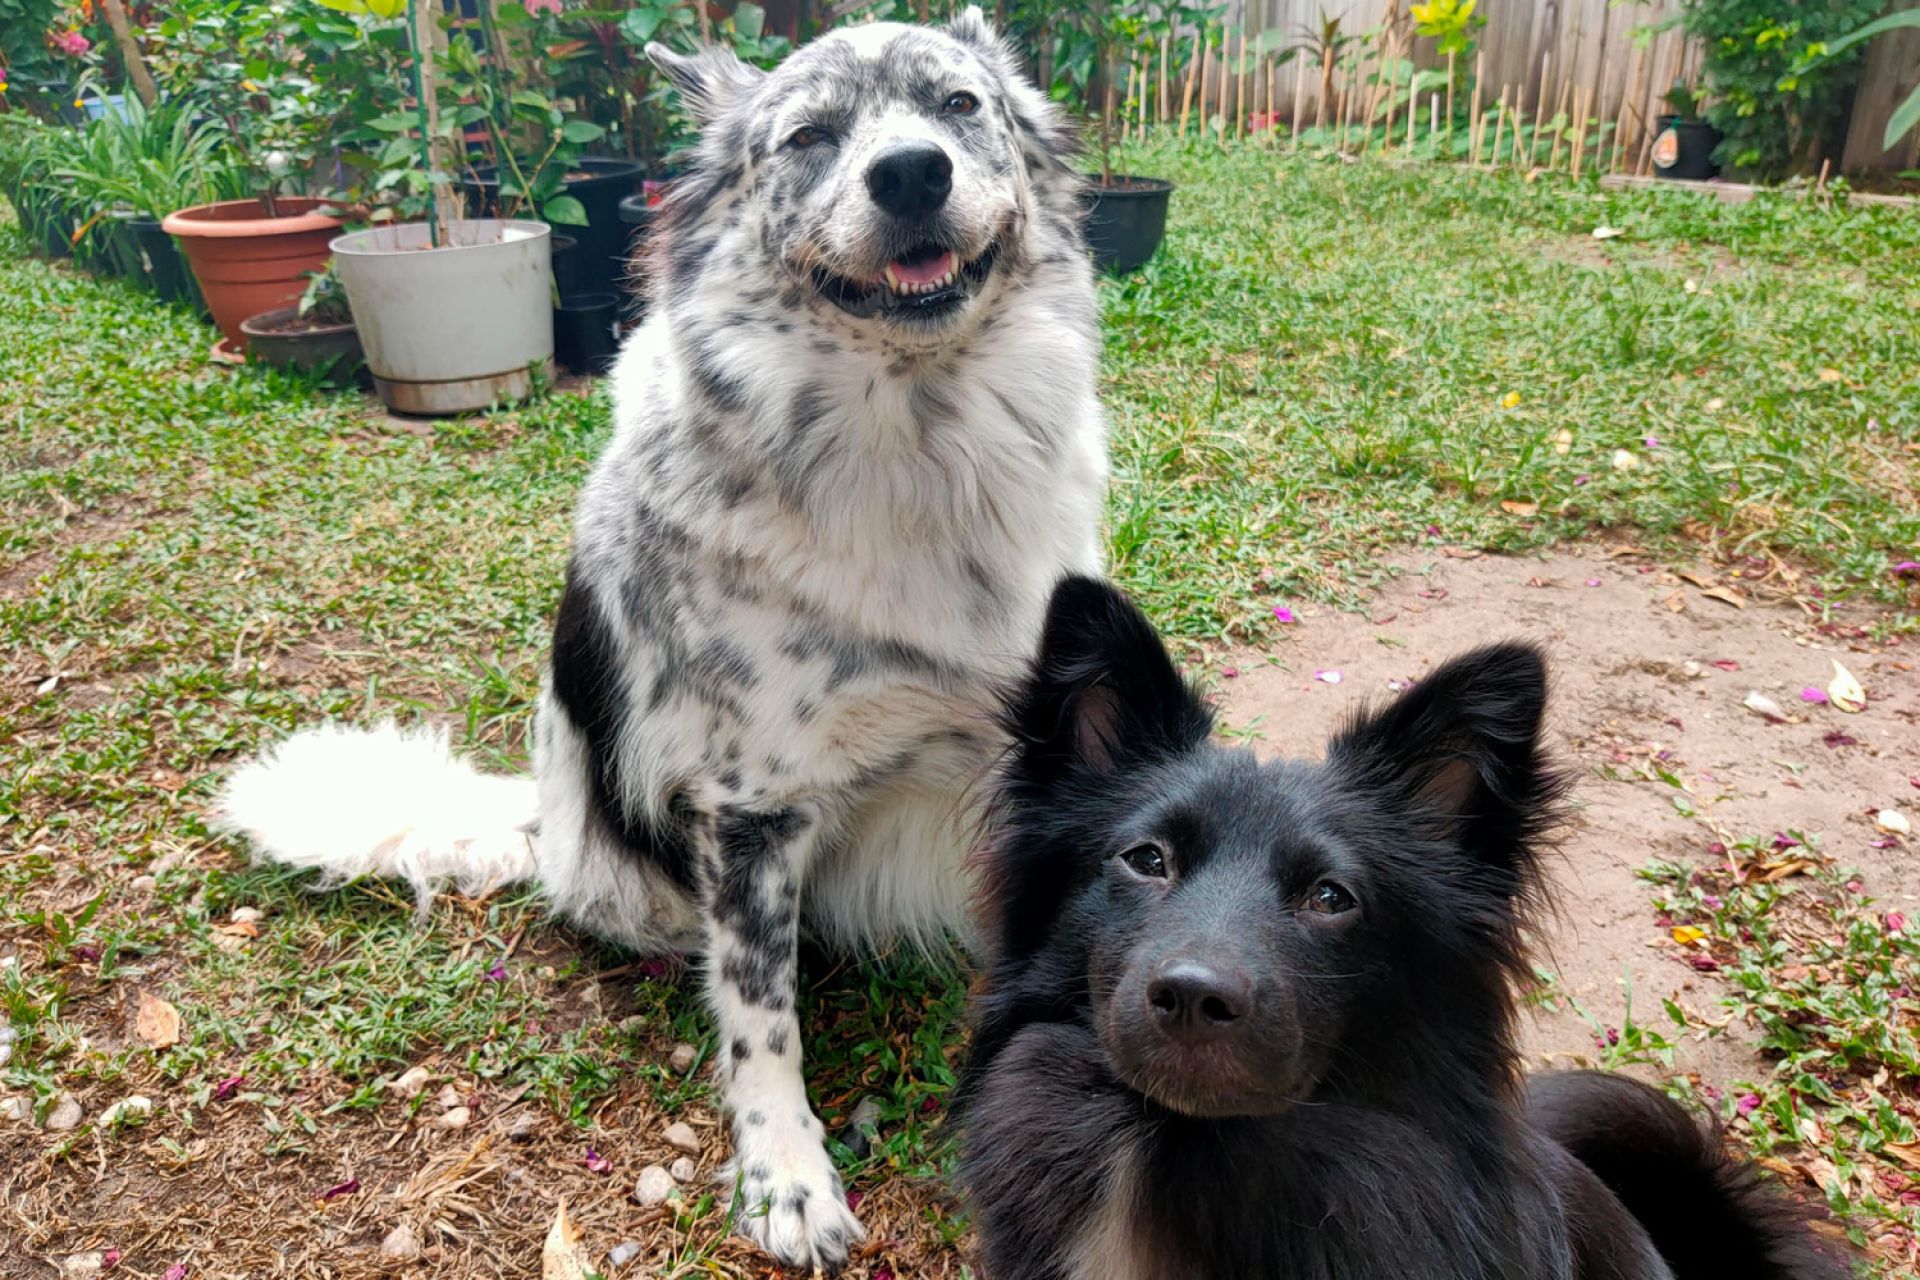 A grey dog and a black dog sit and look at the camera